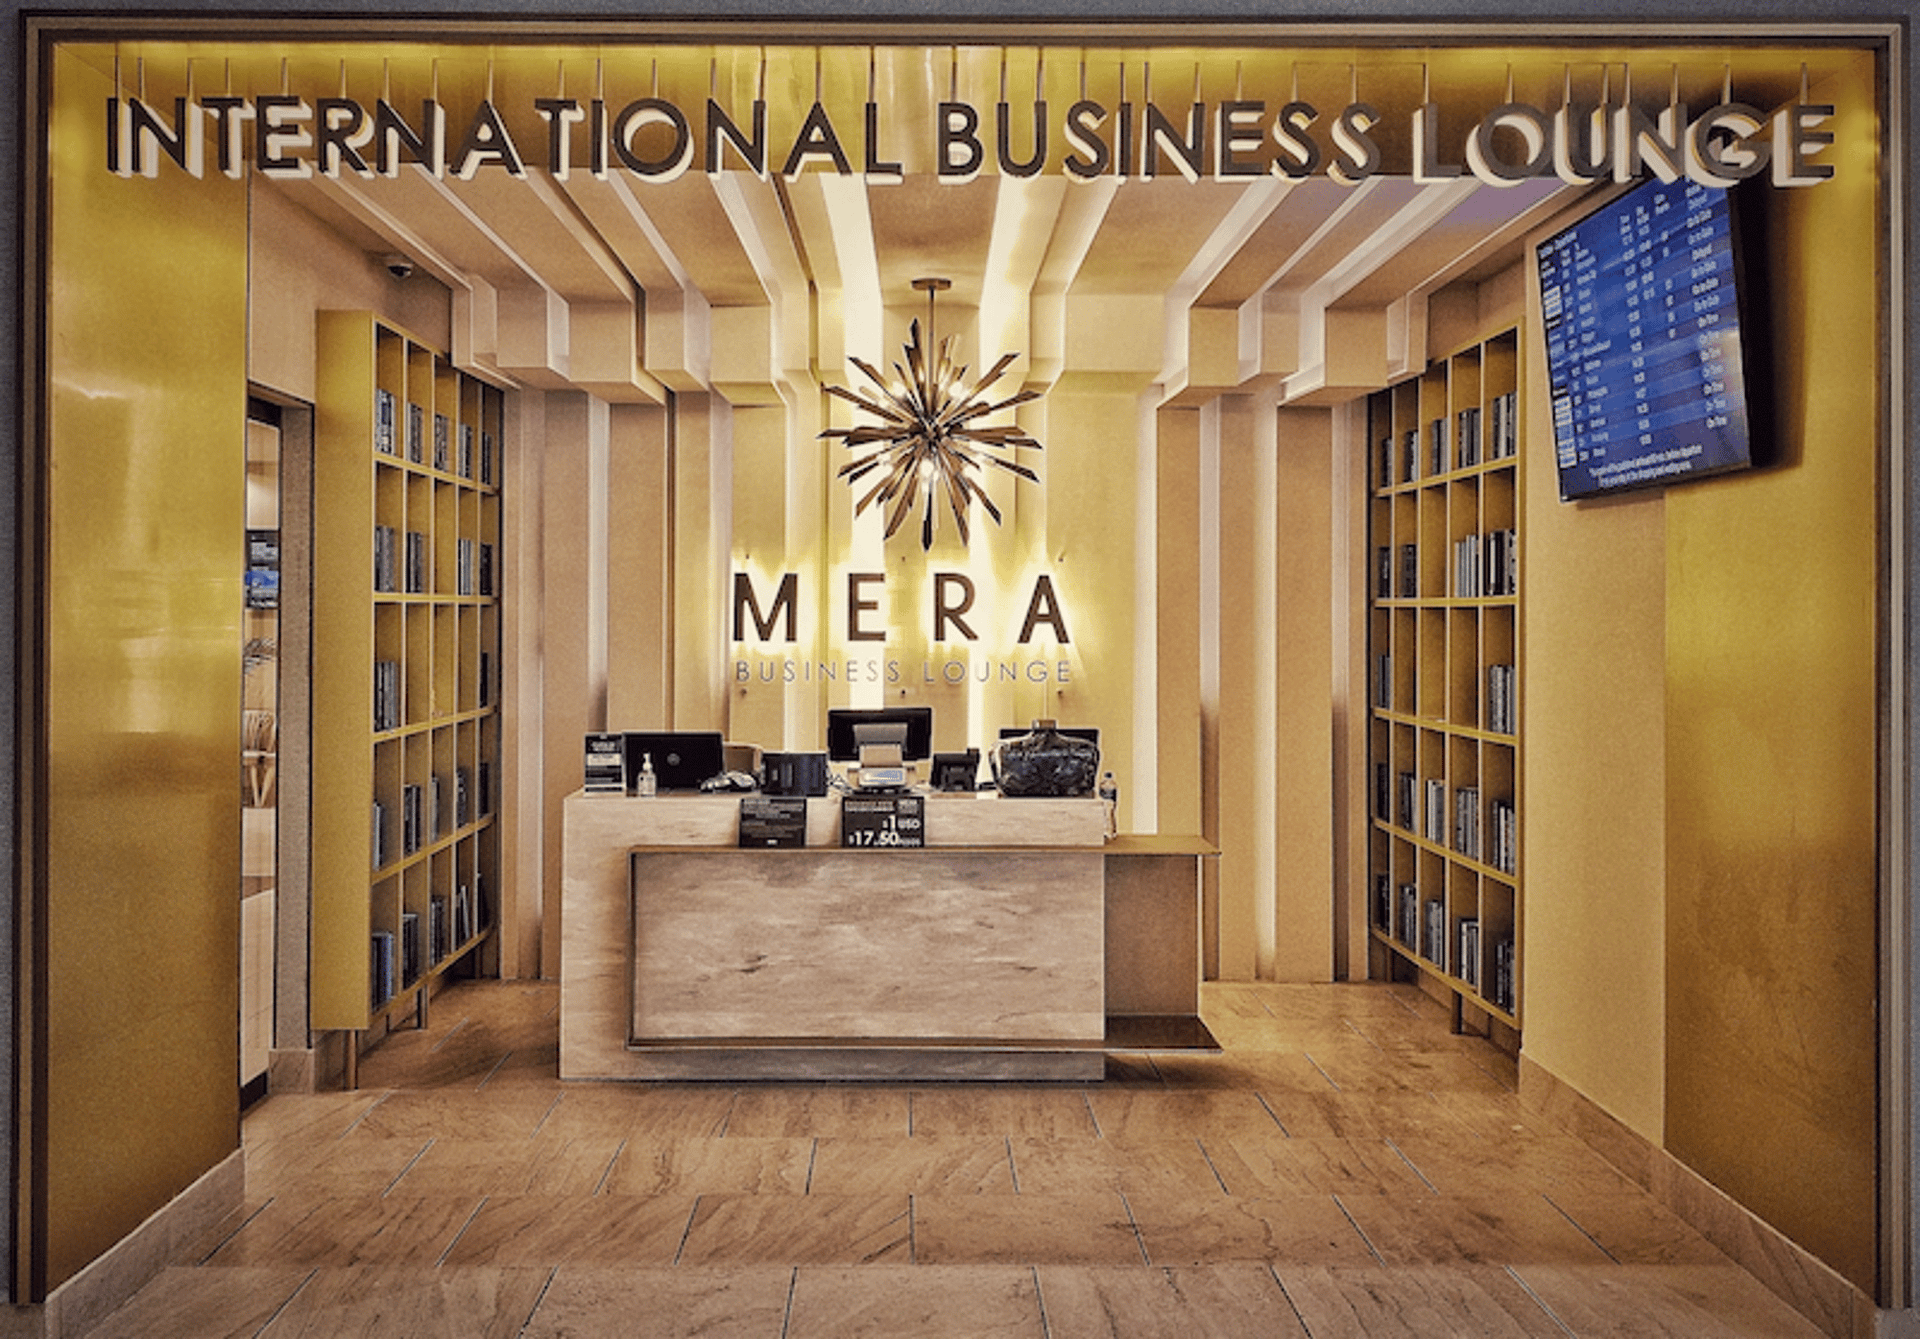 Mera Business Lounge (International) image 25 of 58